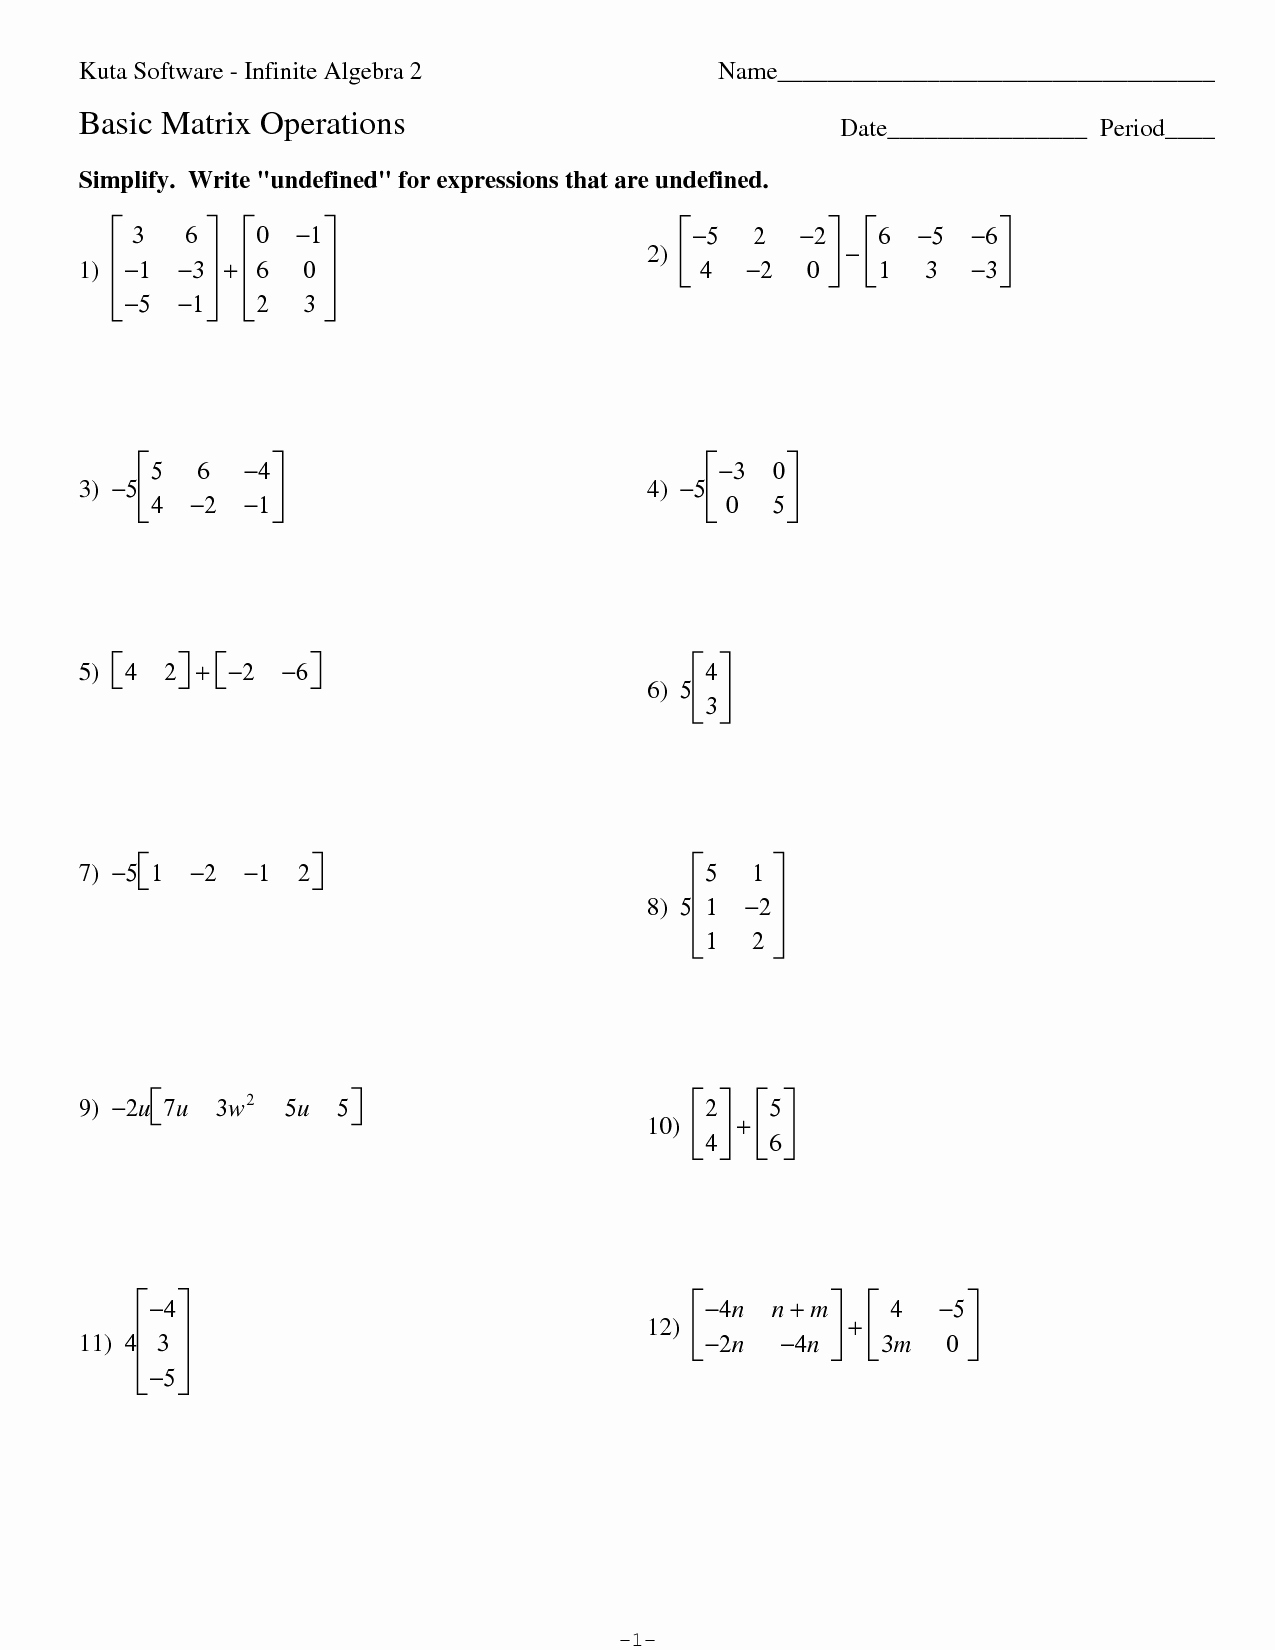 Algebraic Expressions Worksheet Pdf Lovely Simplifying Algebraic Expressions Worksheet Pdf the Best